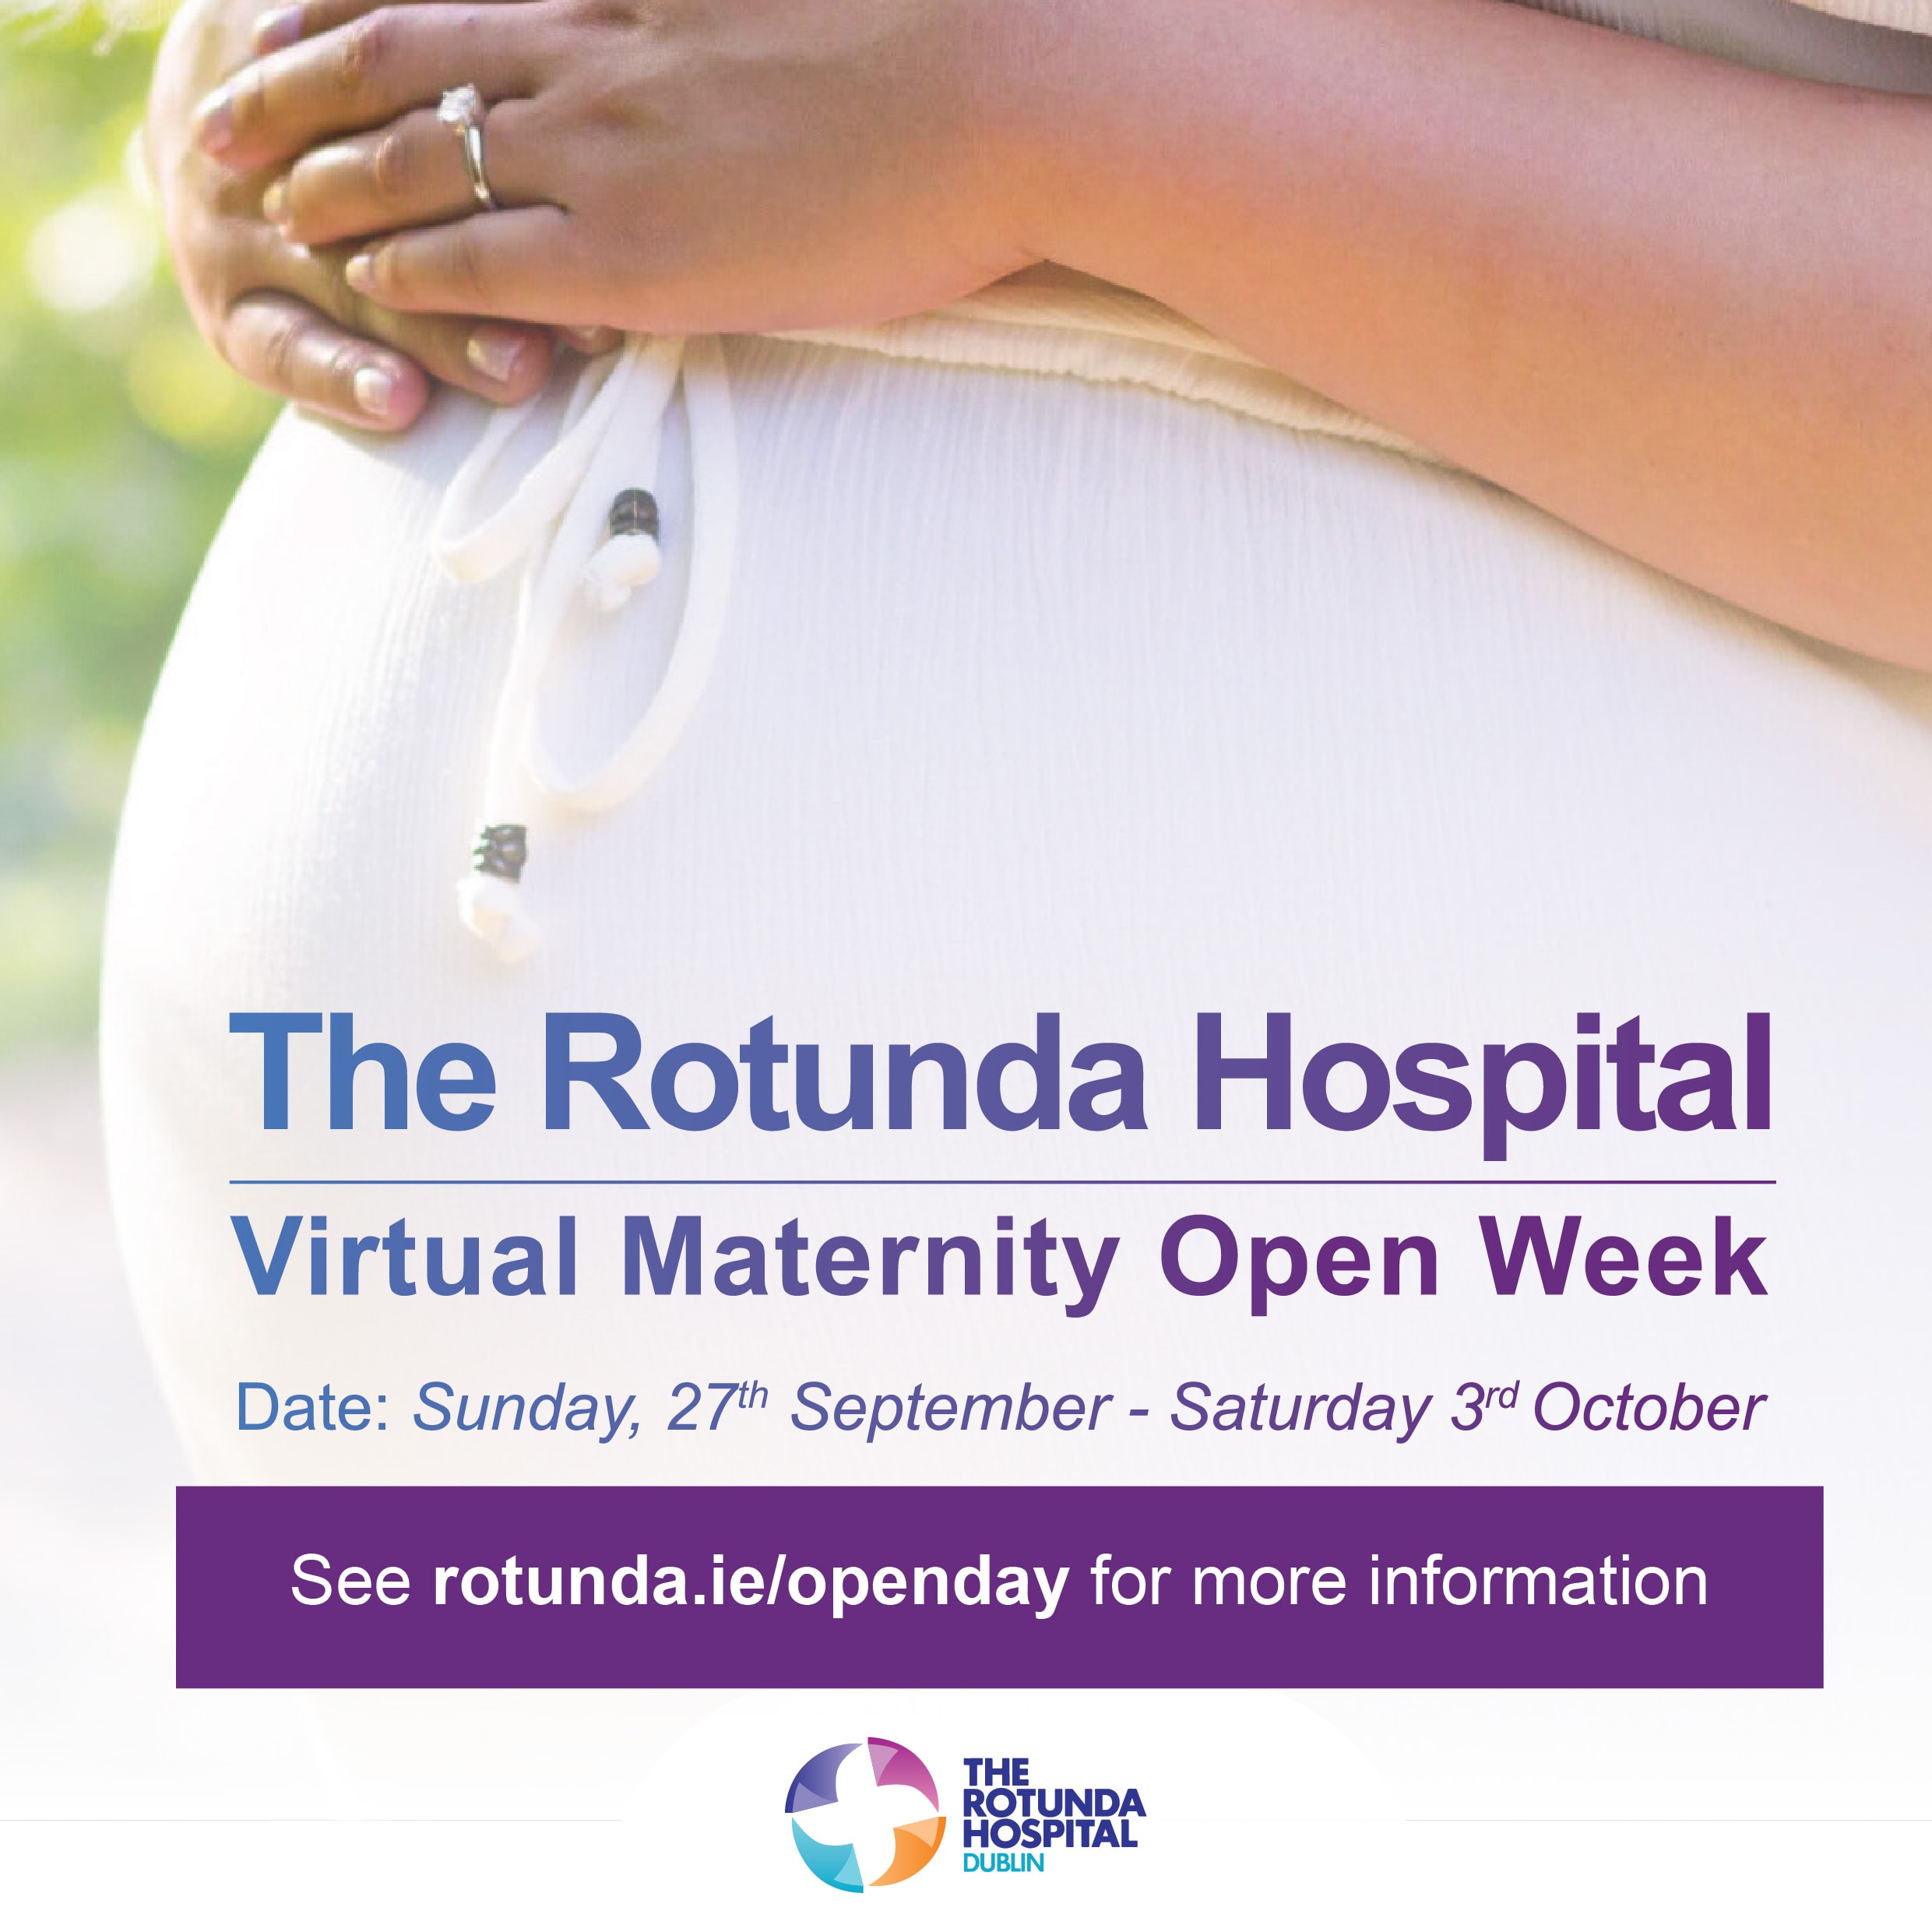 Follow the Rotunda Virtual Maternity Open Week on Instagram